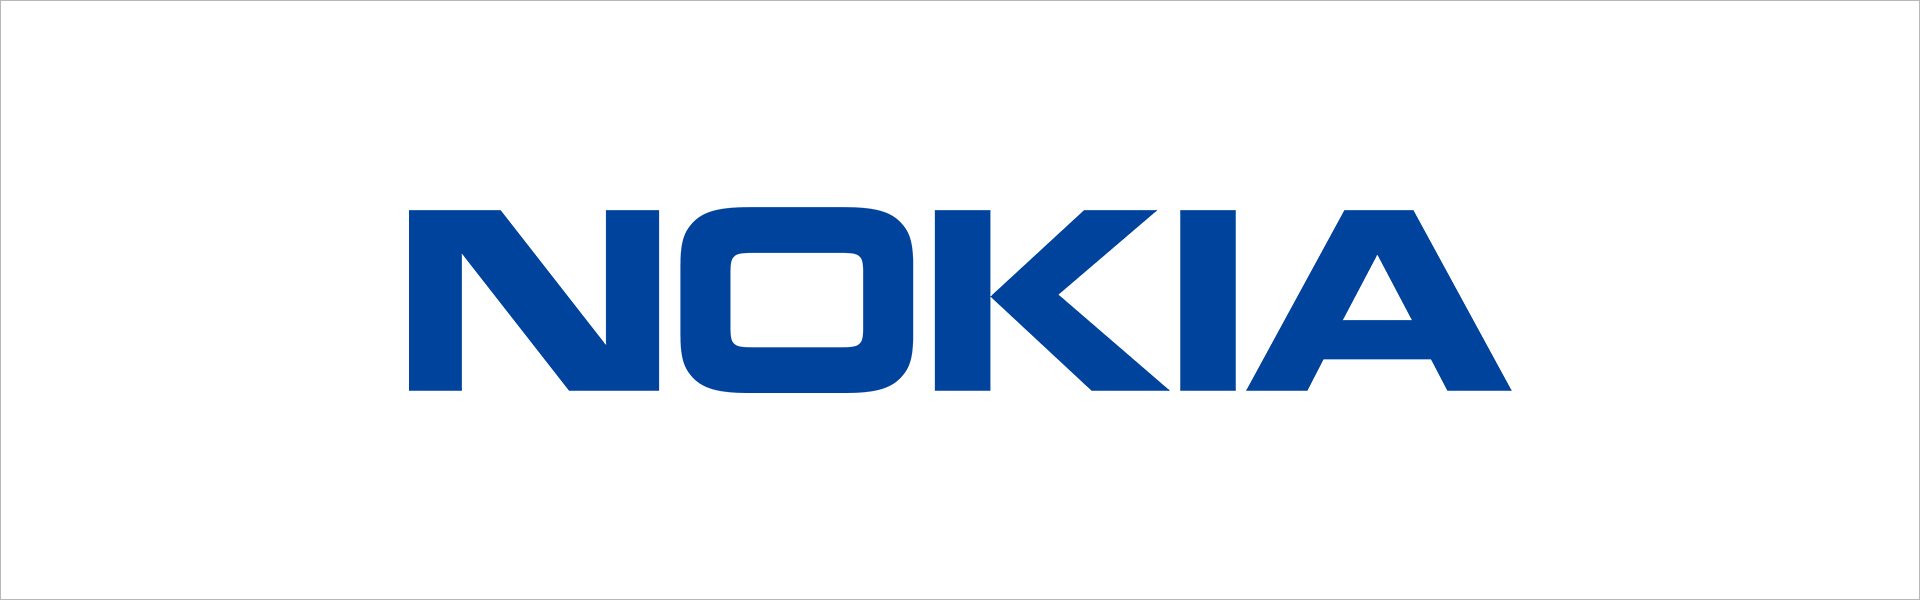 Nokia A00028116 Nokia